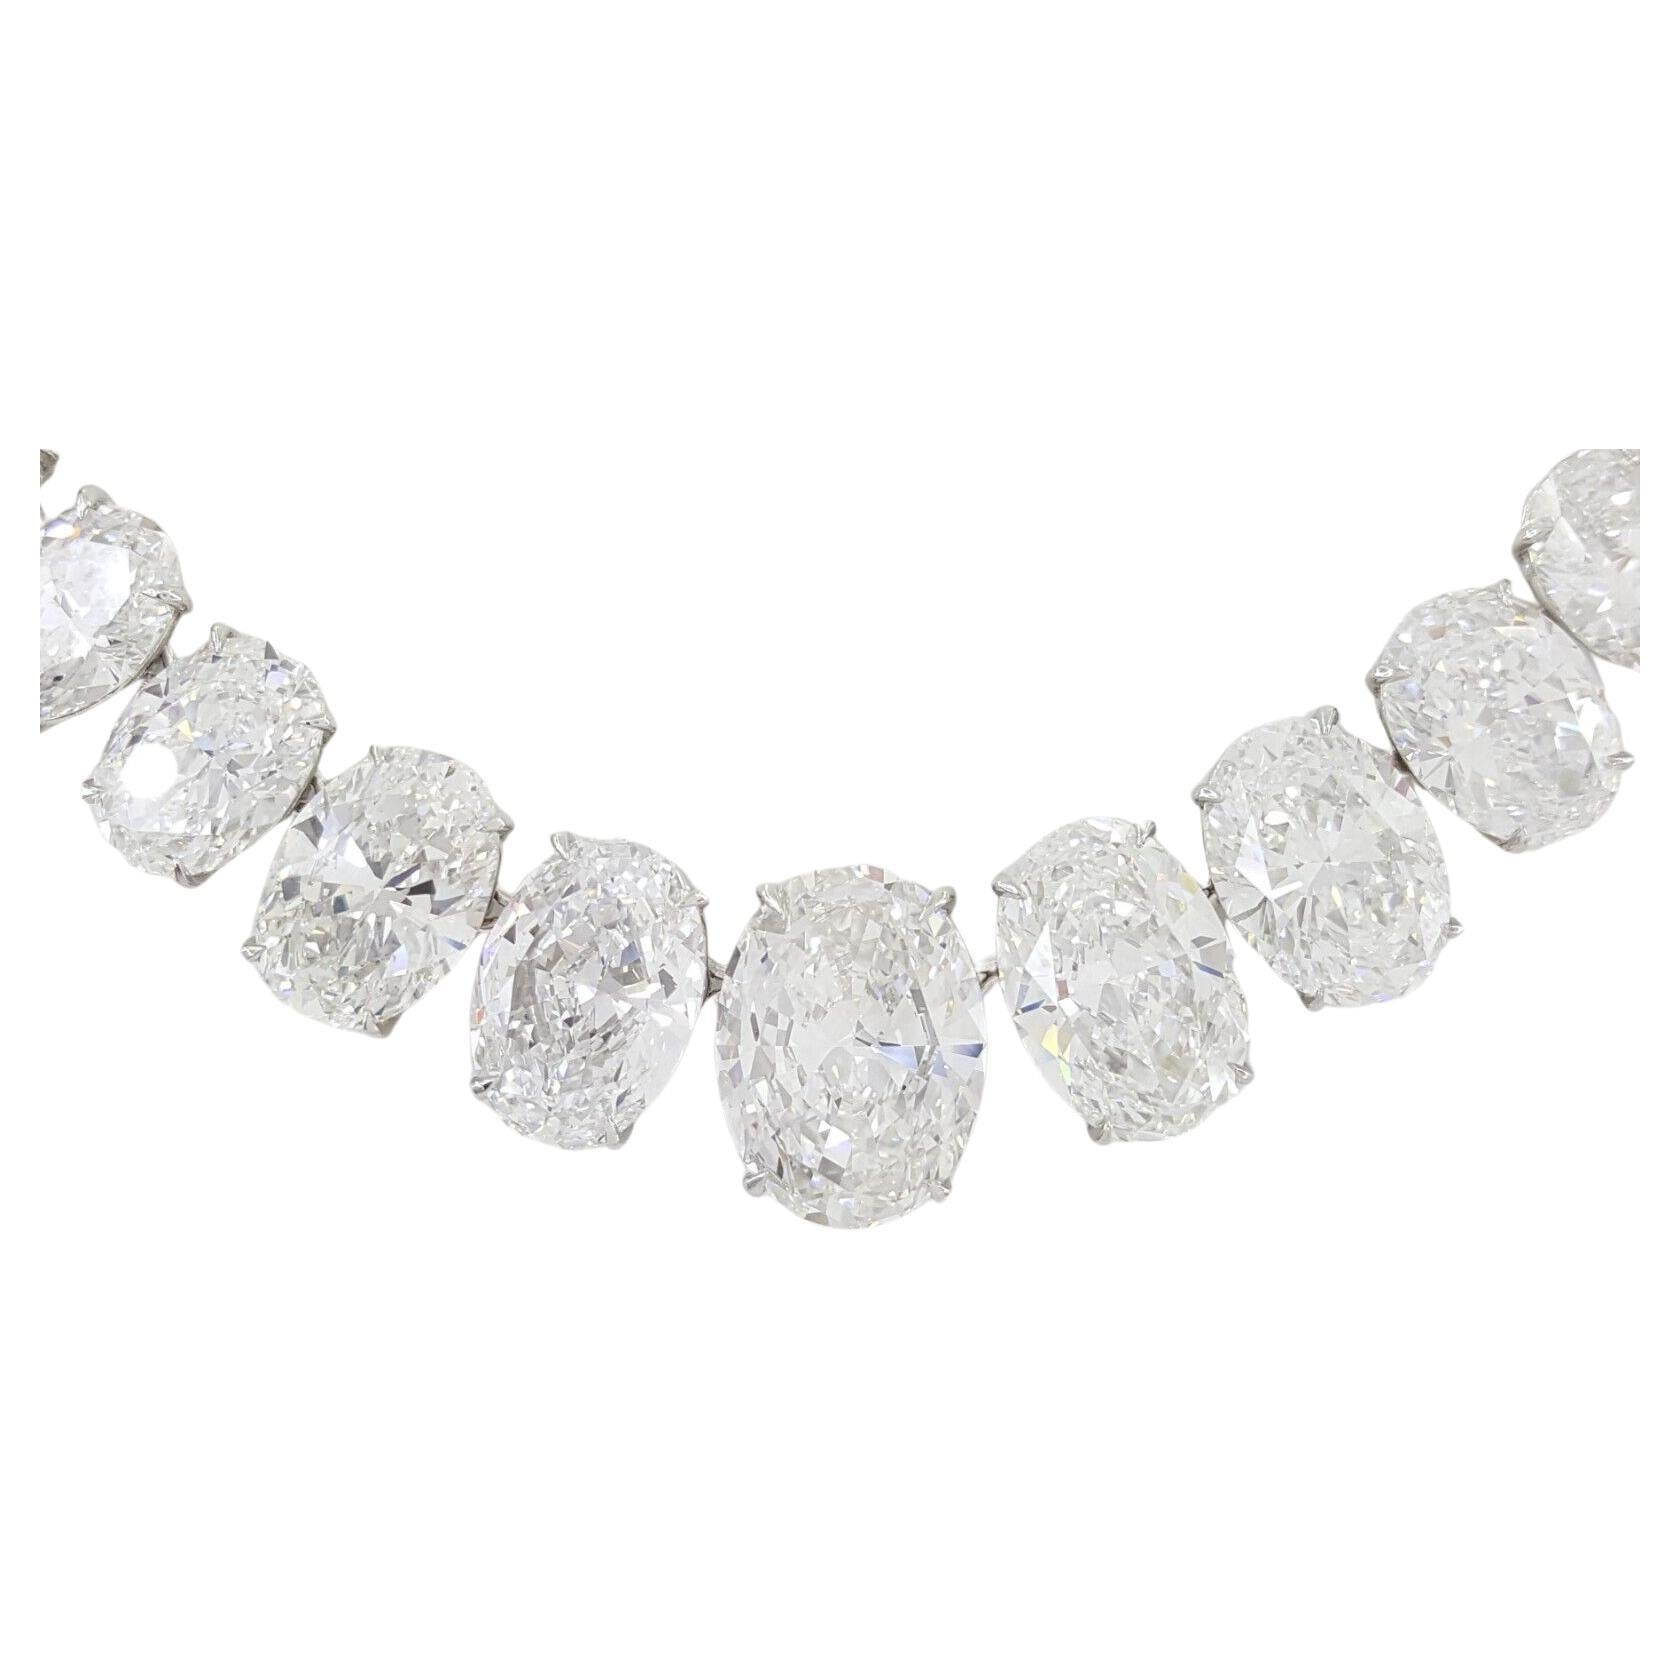 Collier Riviera certifié 16,60 carats de diamants taille ovale